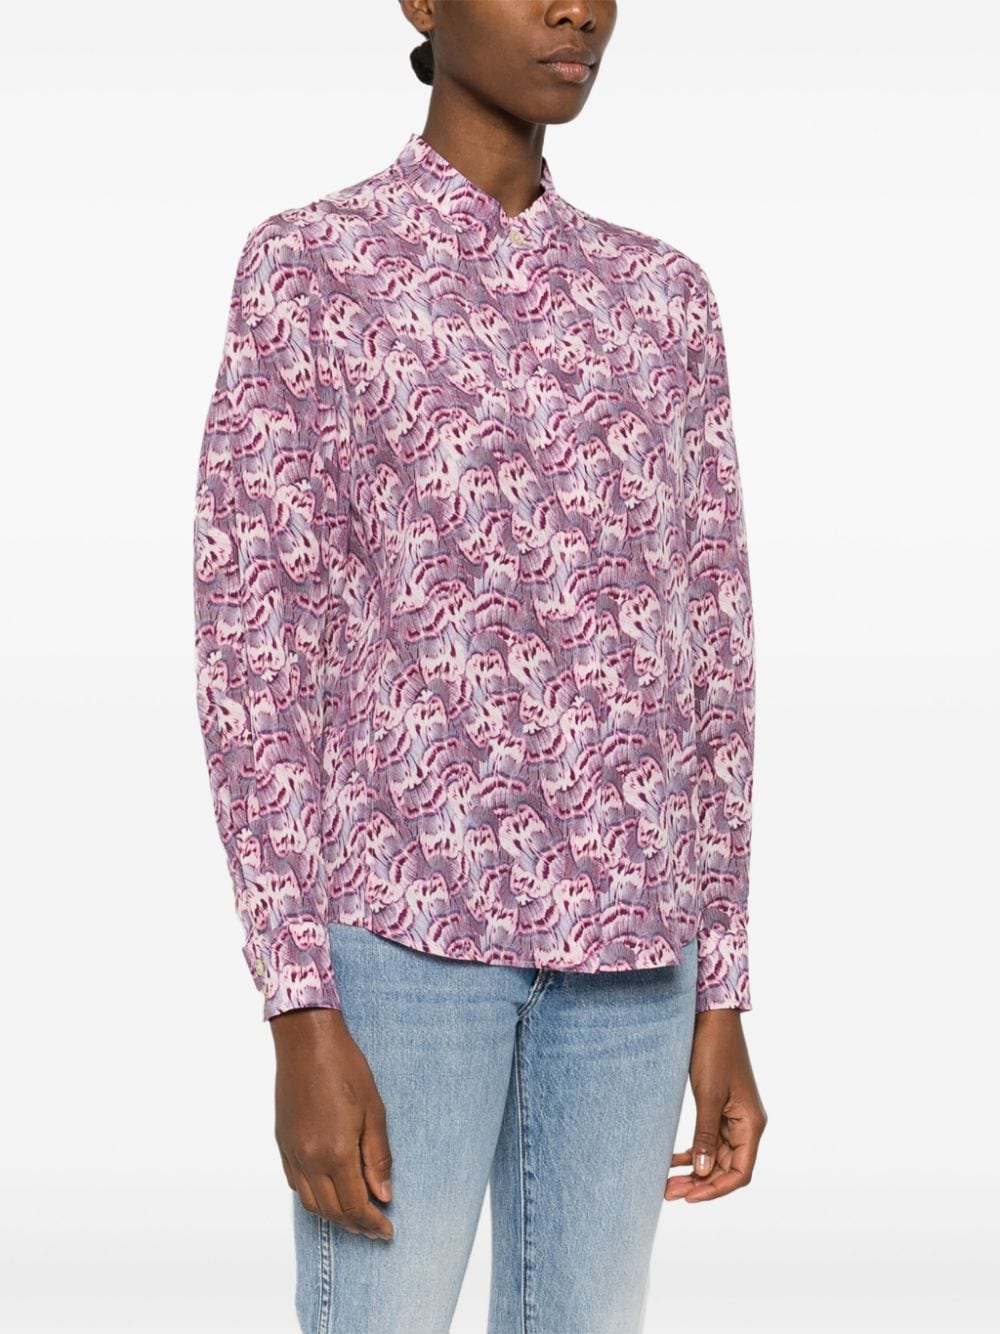 llda floral-print shirt<BR/><BR/><BR/>